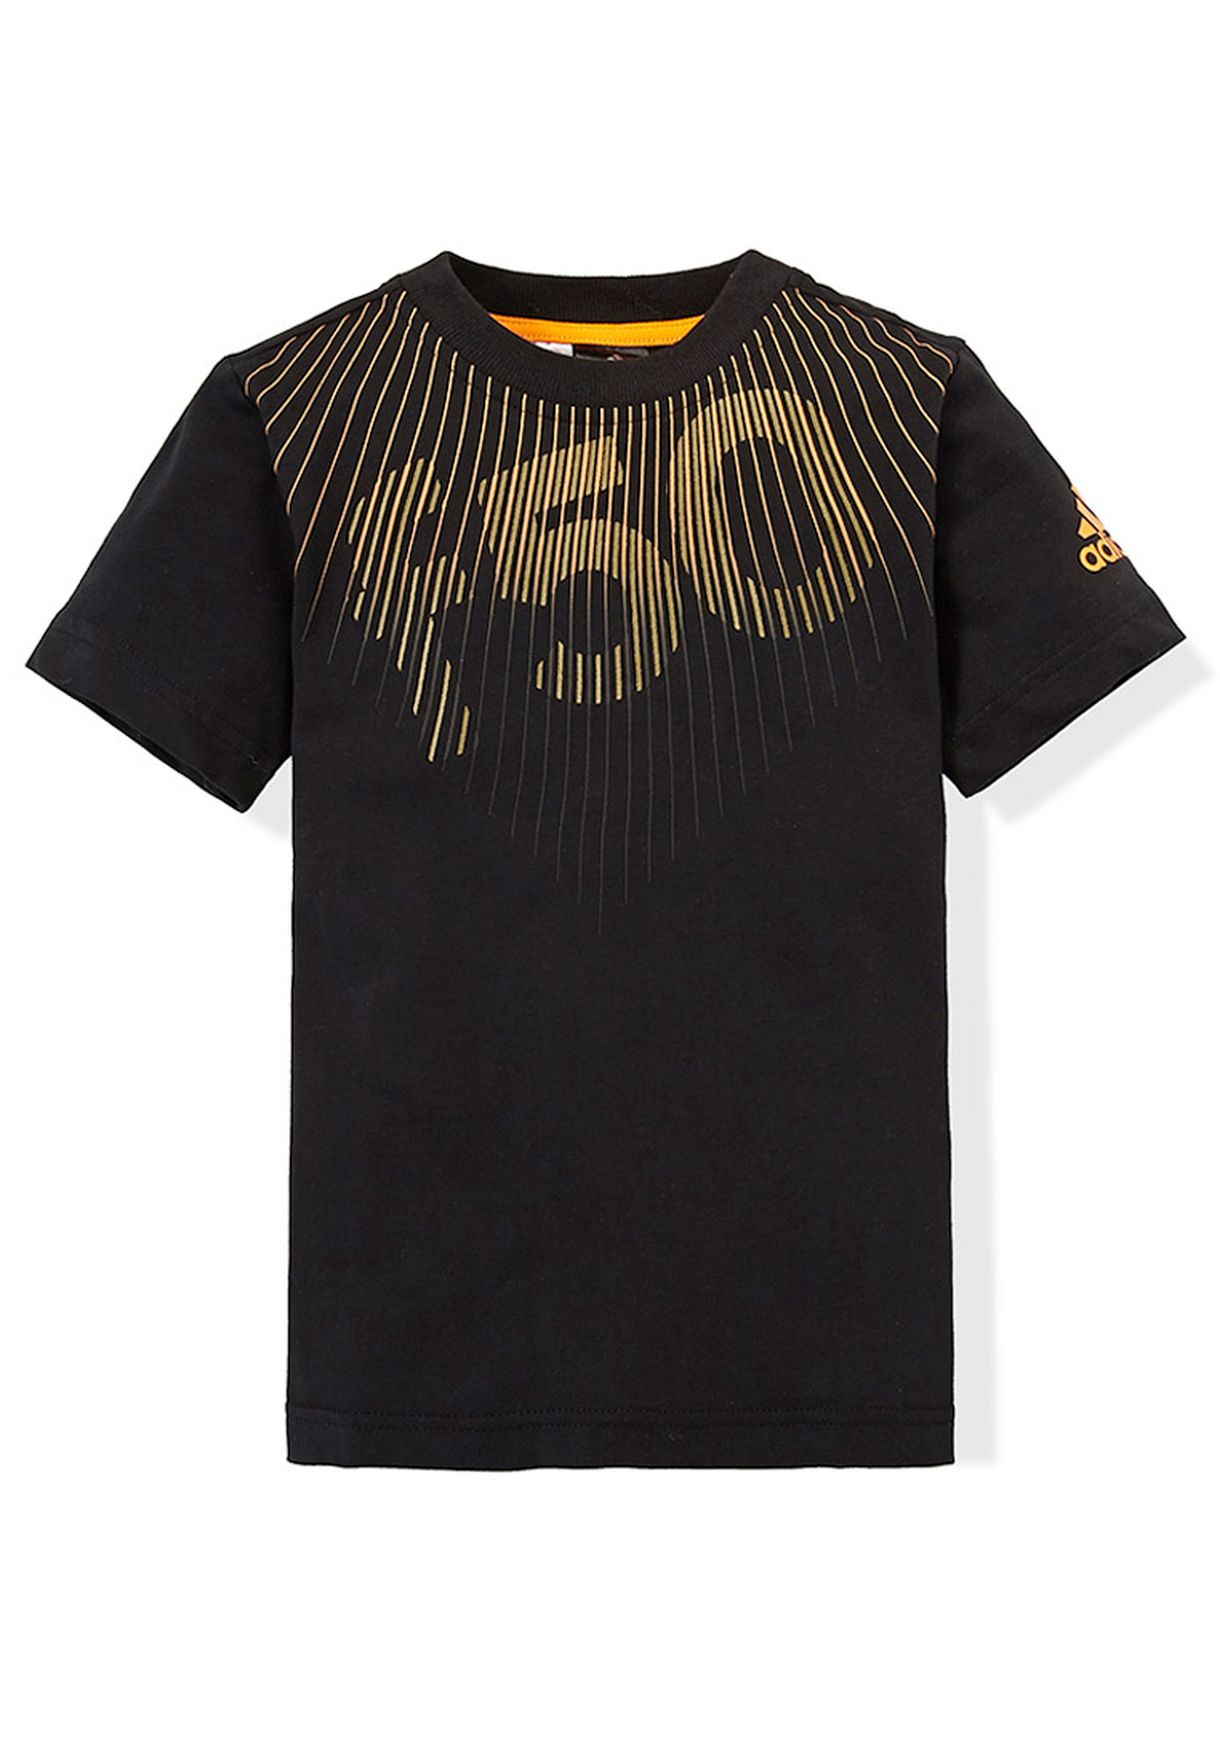 adidas f50 t shirt